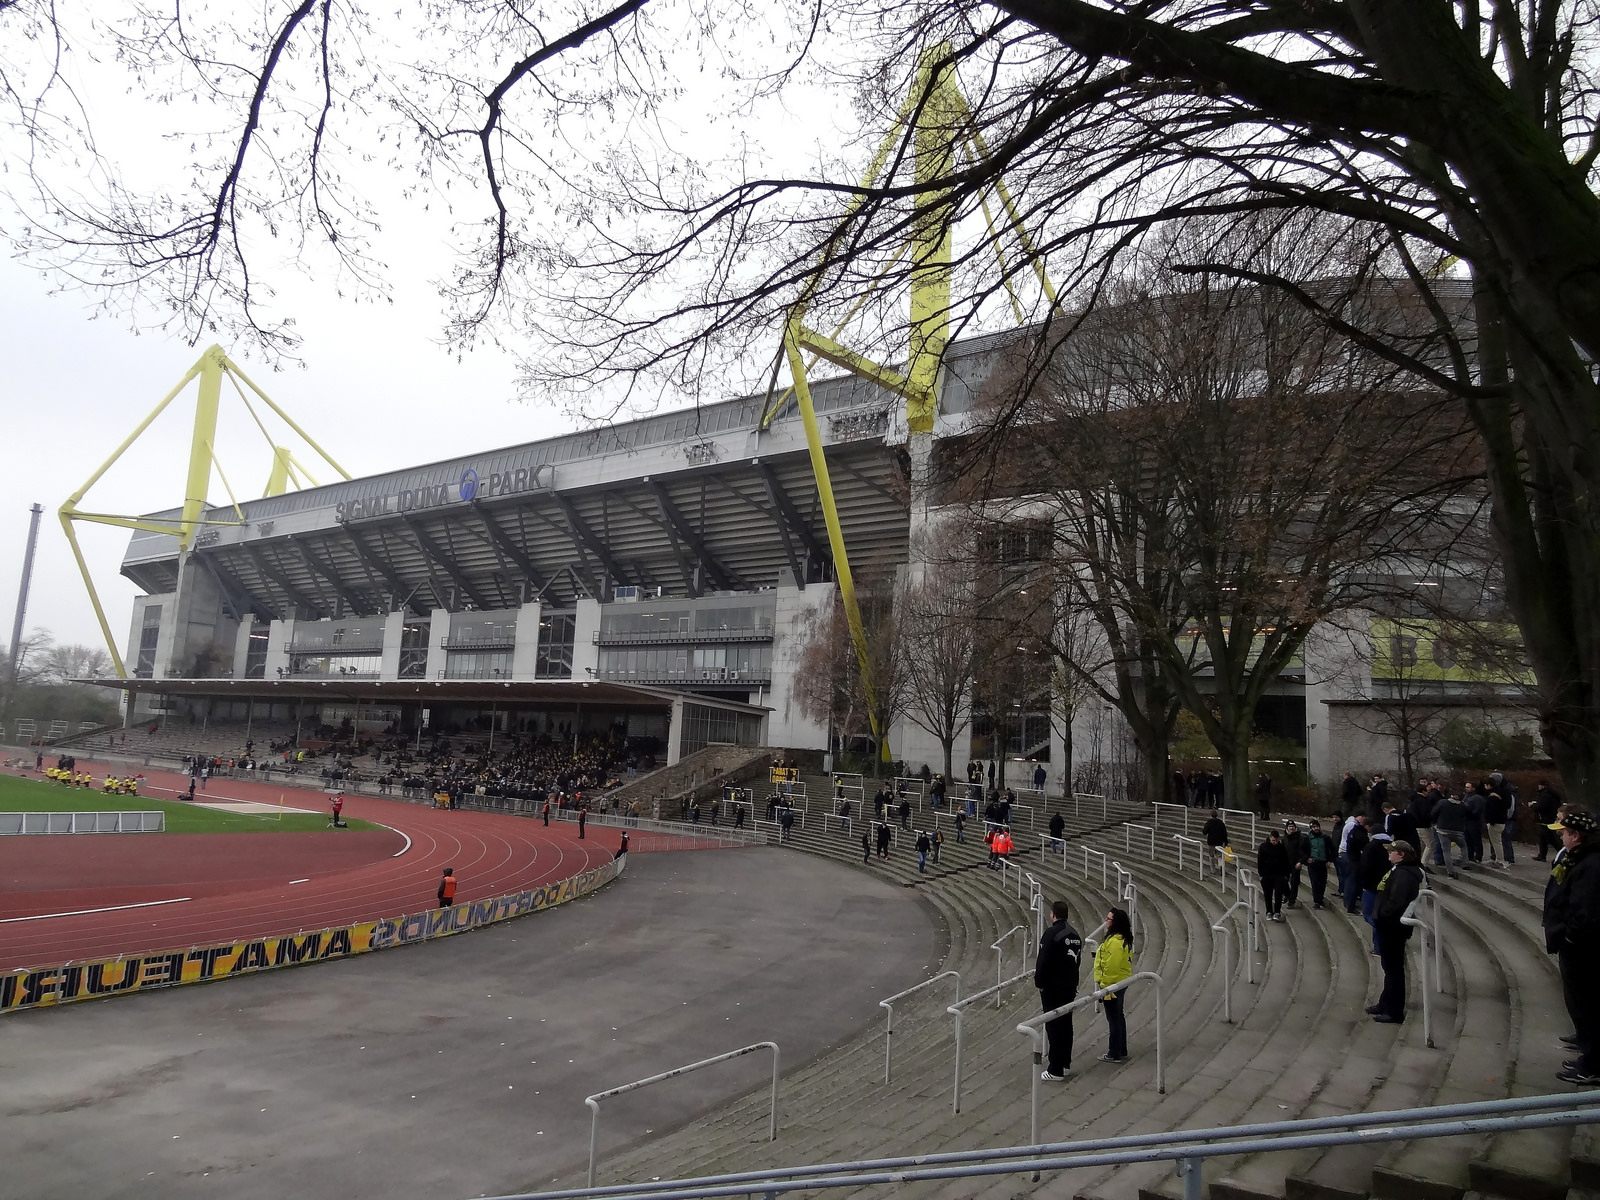 Stadion Rote Erde – Dortmund, Germany